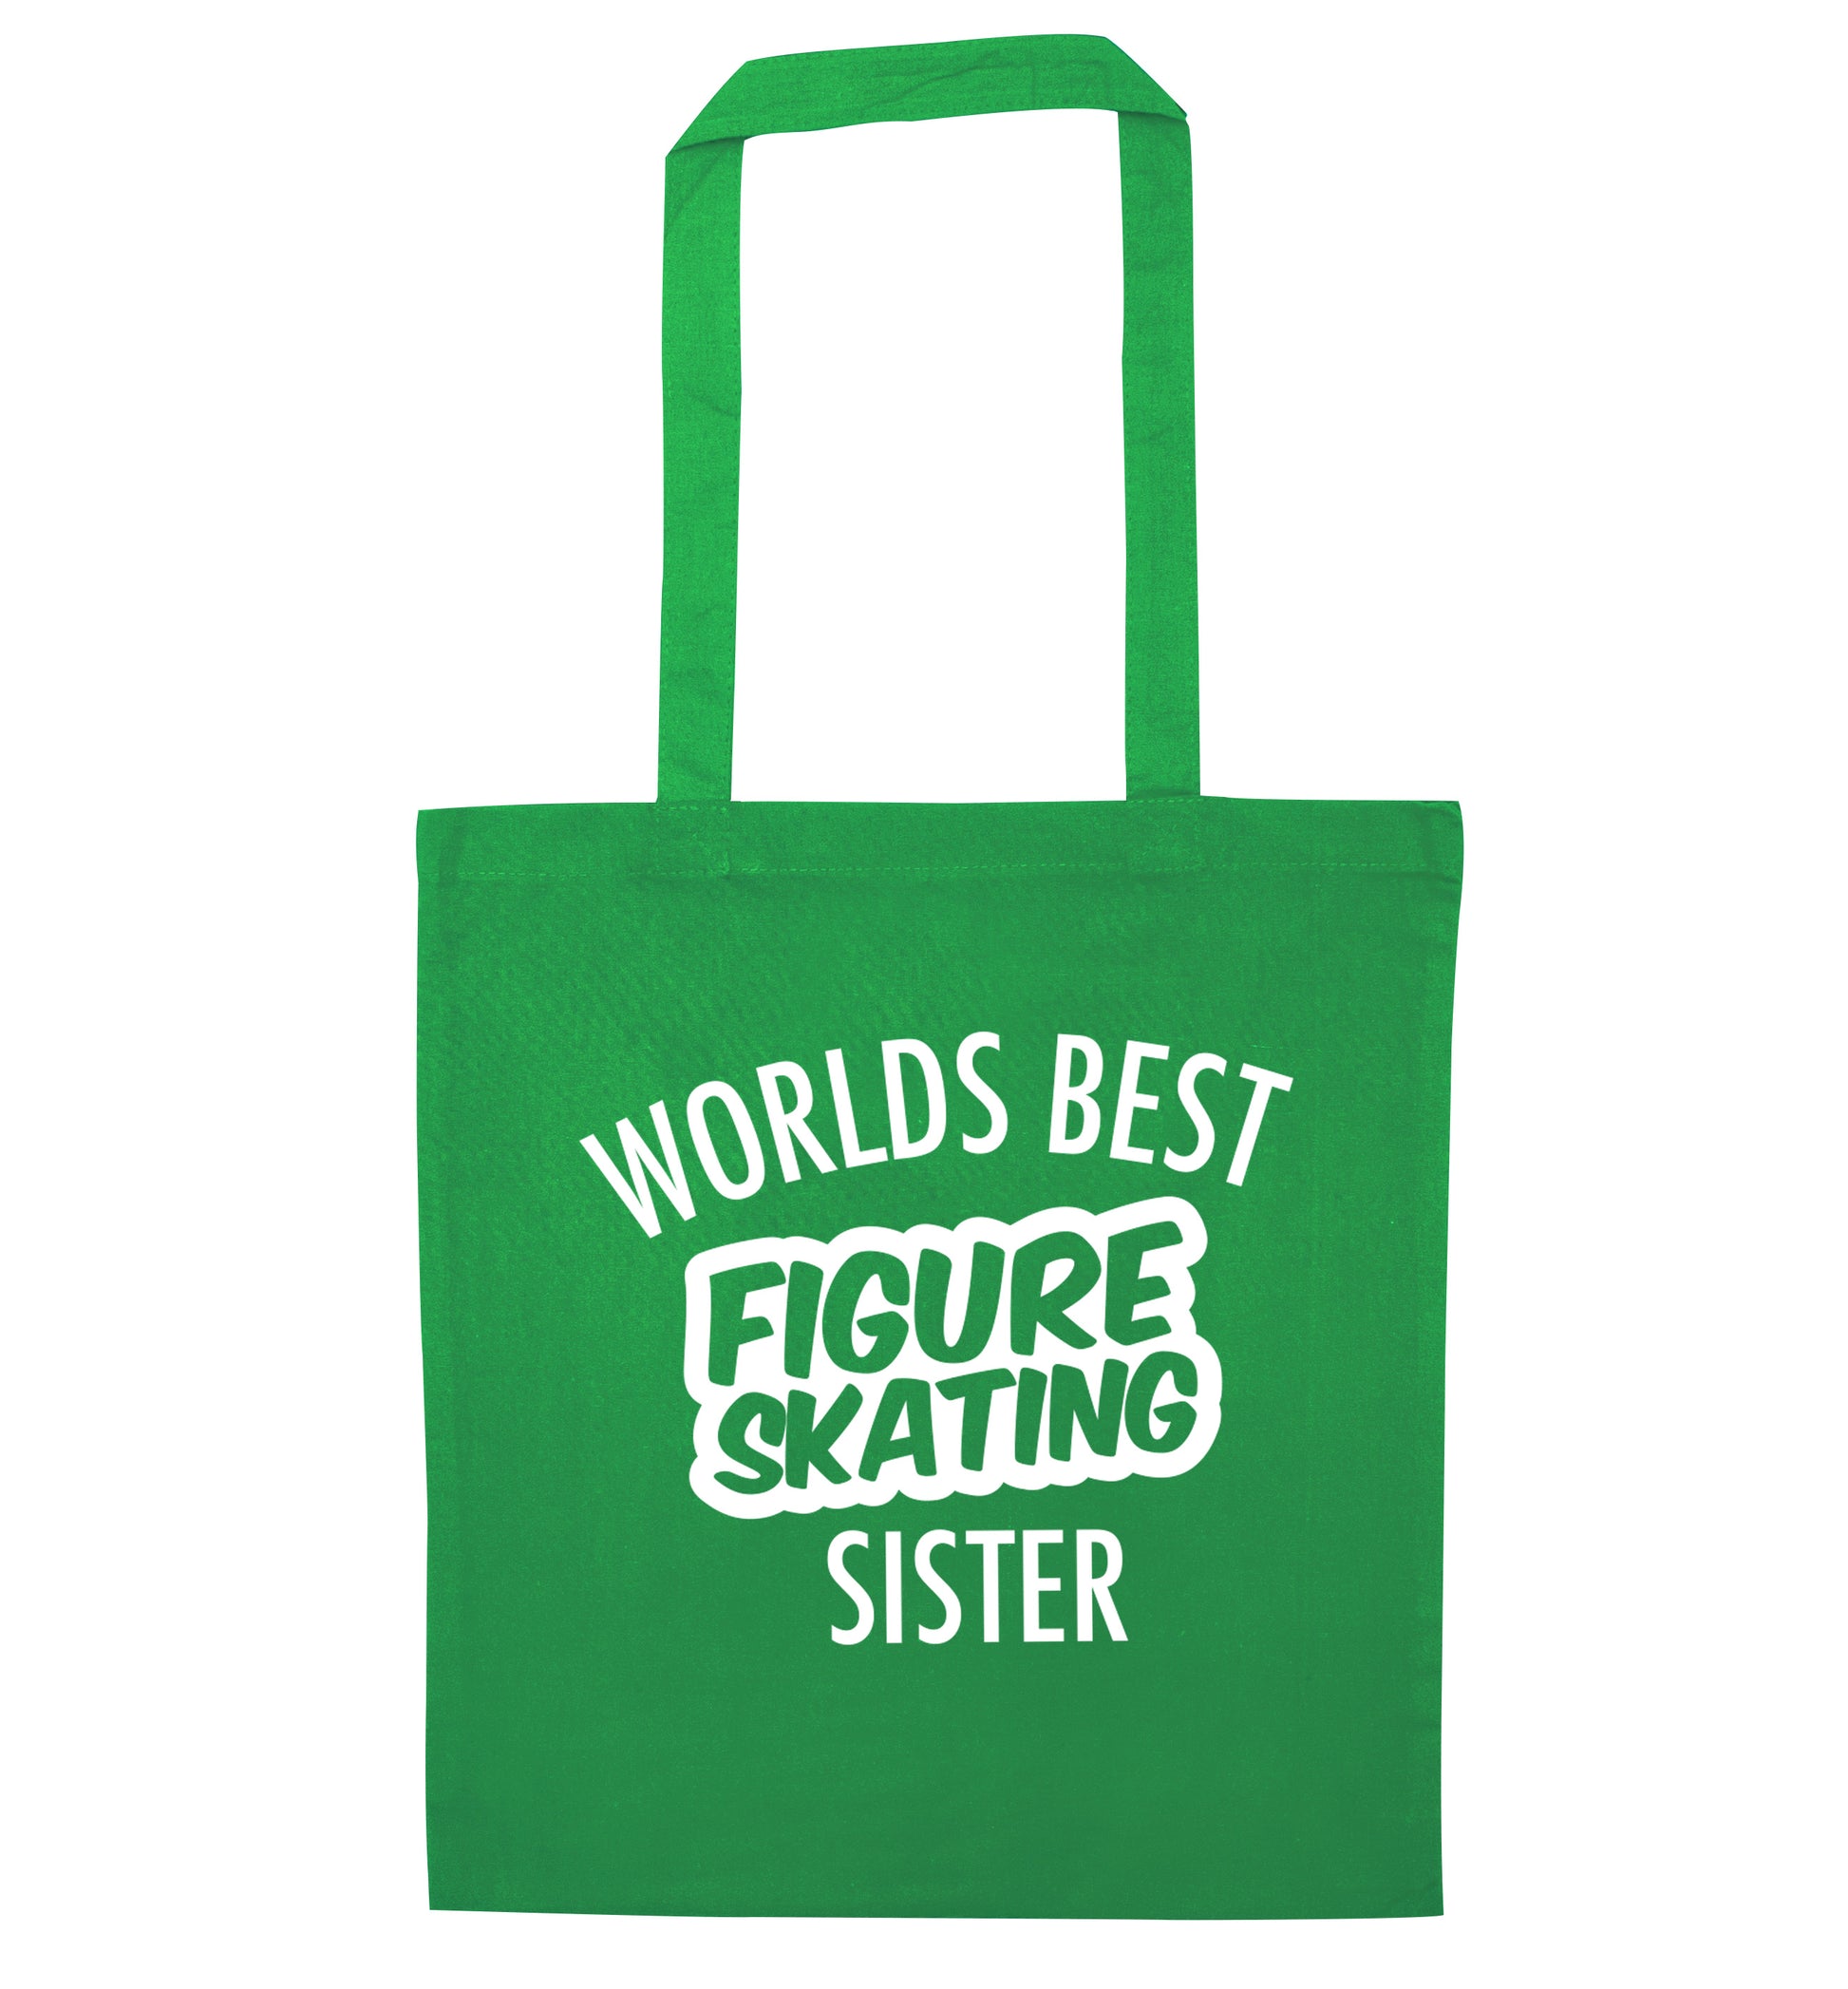 Worlds best figure skating sistergreen tote bag